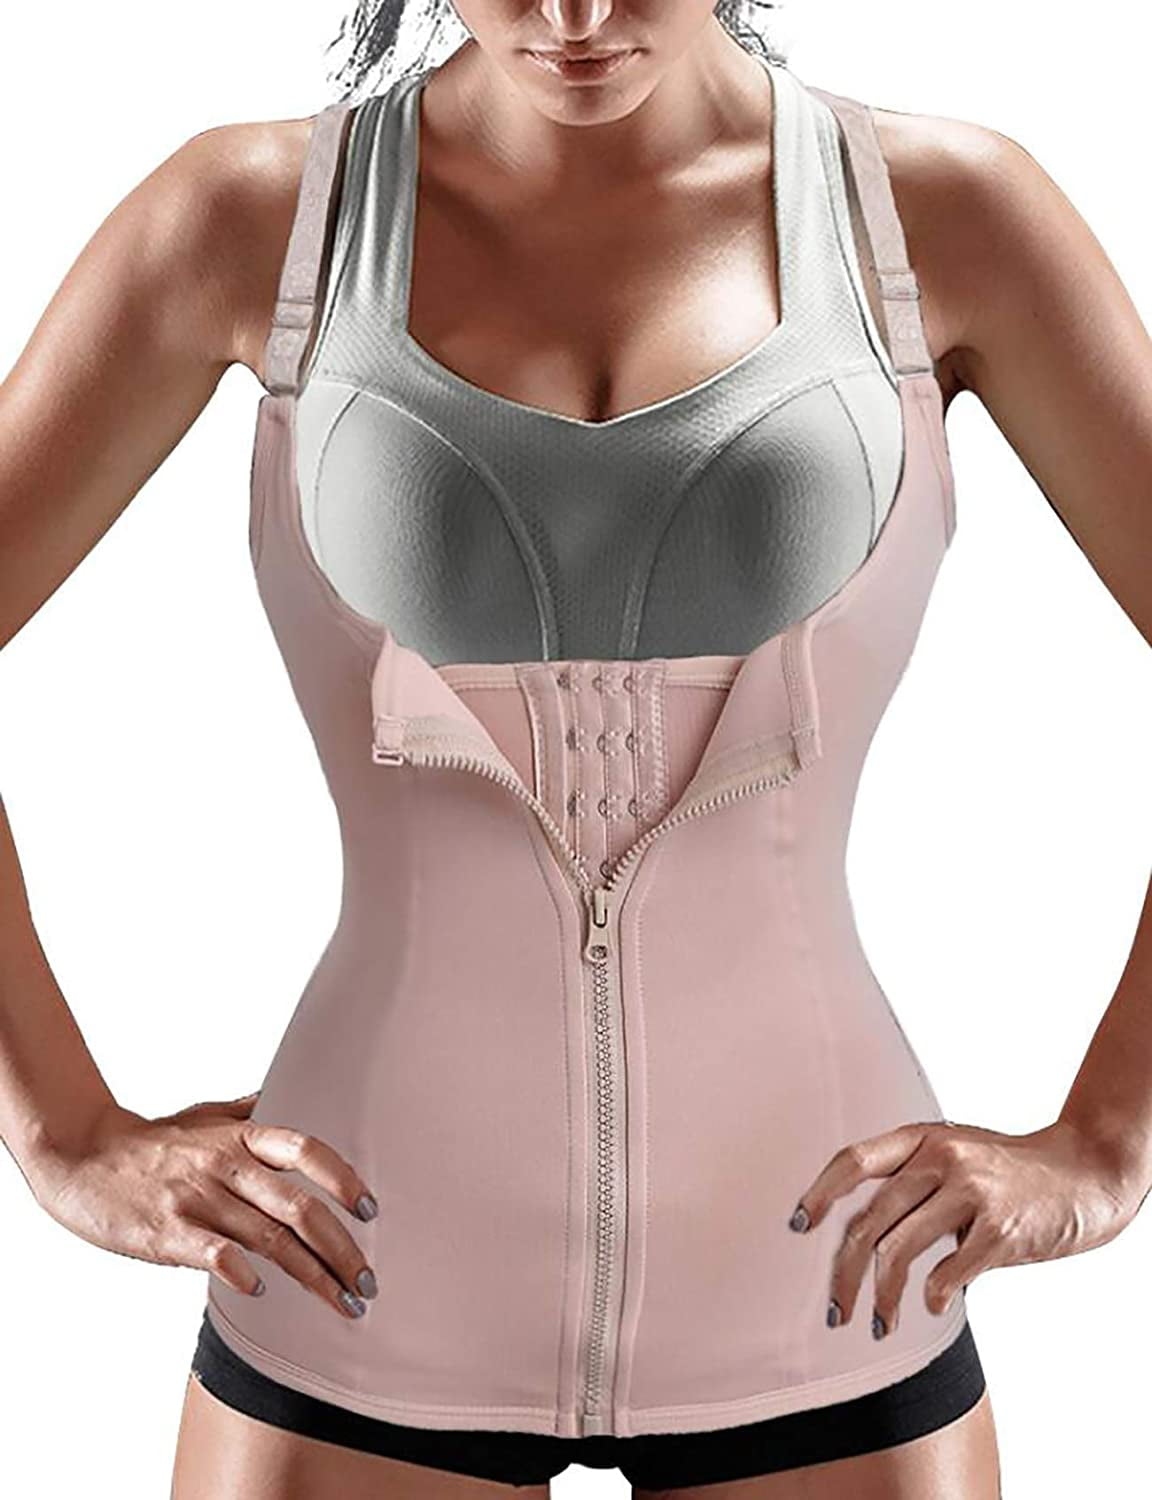 Gotoly Women Waist Trainer Corset Zipper Vest Body Shaper Tummy Control Cincher Tank Top with Adjustable Straps 